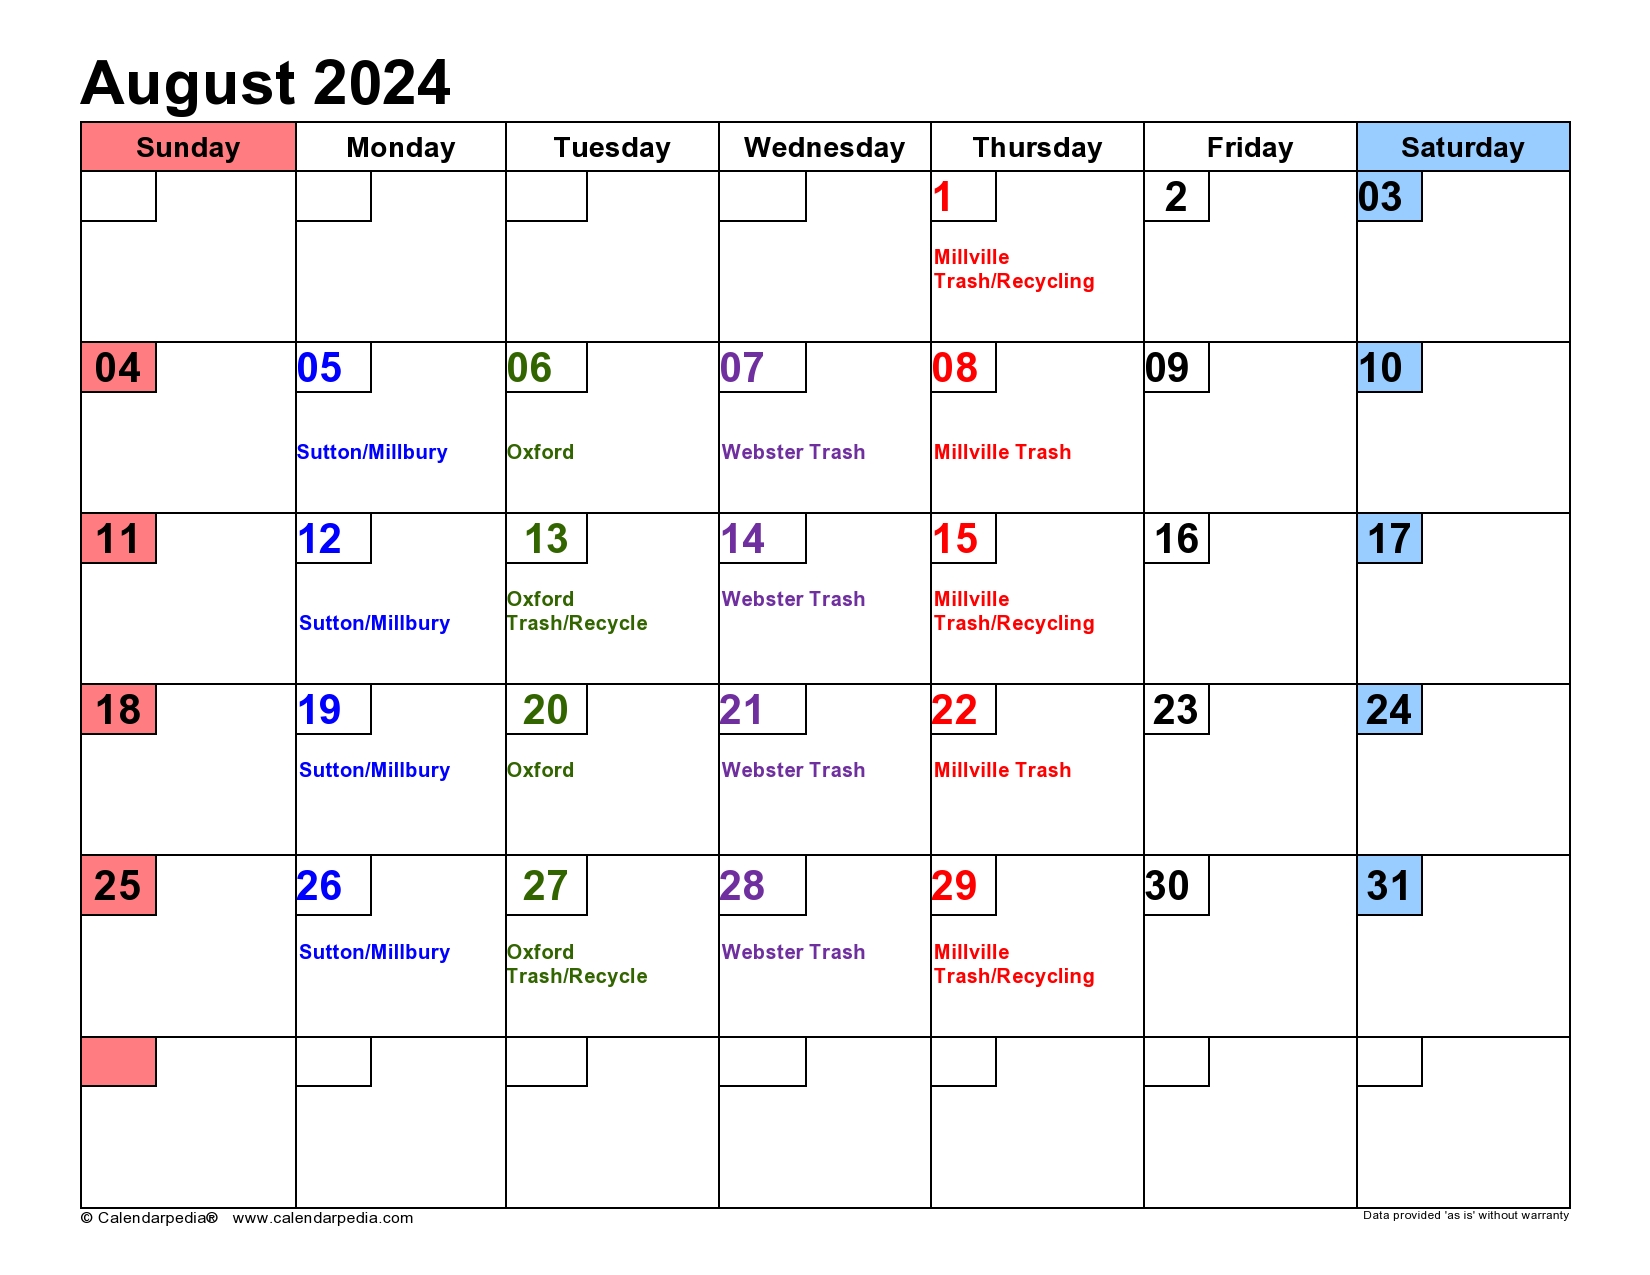 August 2024 Calendar-page0001